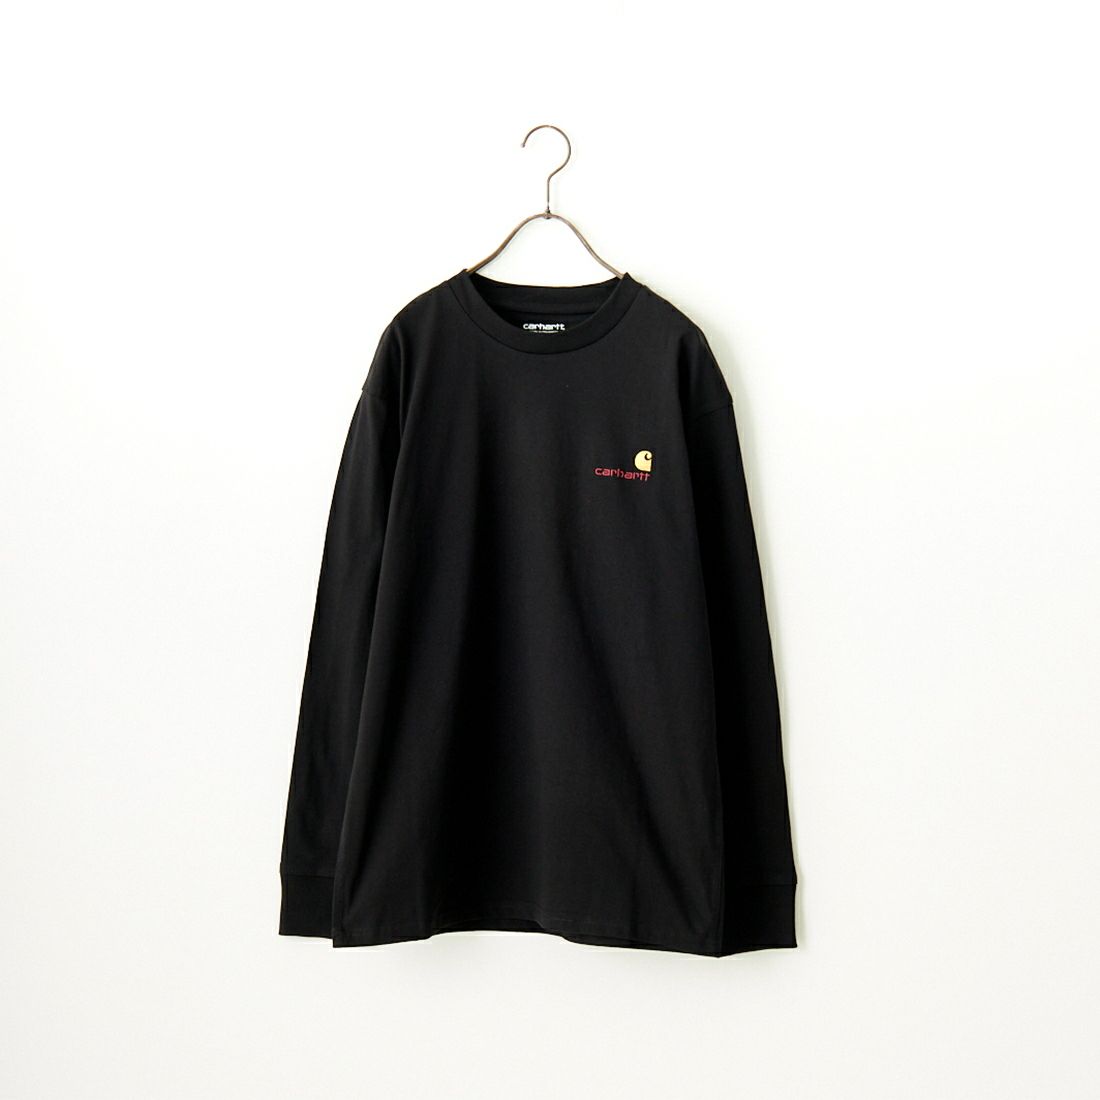 carhartt WIP [カーハートダブリューアイピー] ロングスリーブアメリカンスクリプトTシャツ [I029955] BLACK